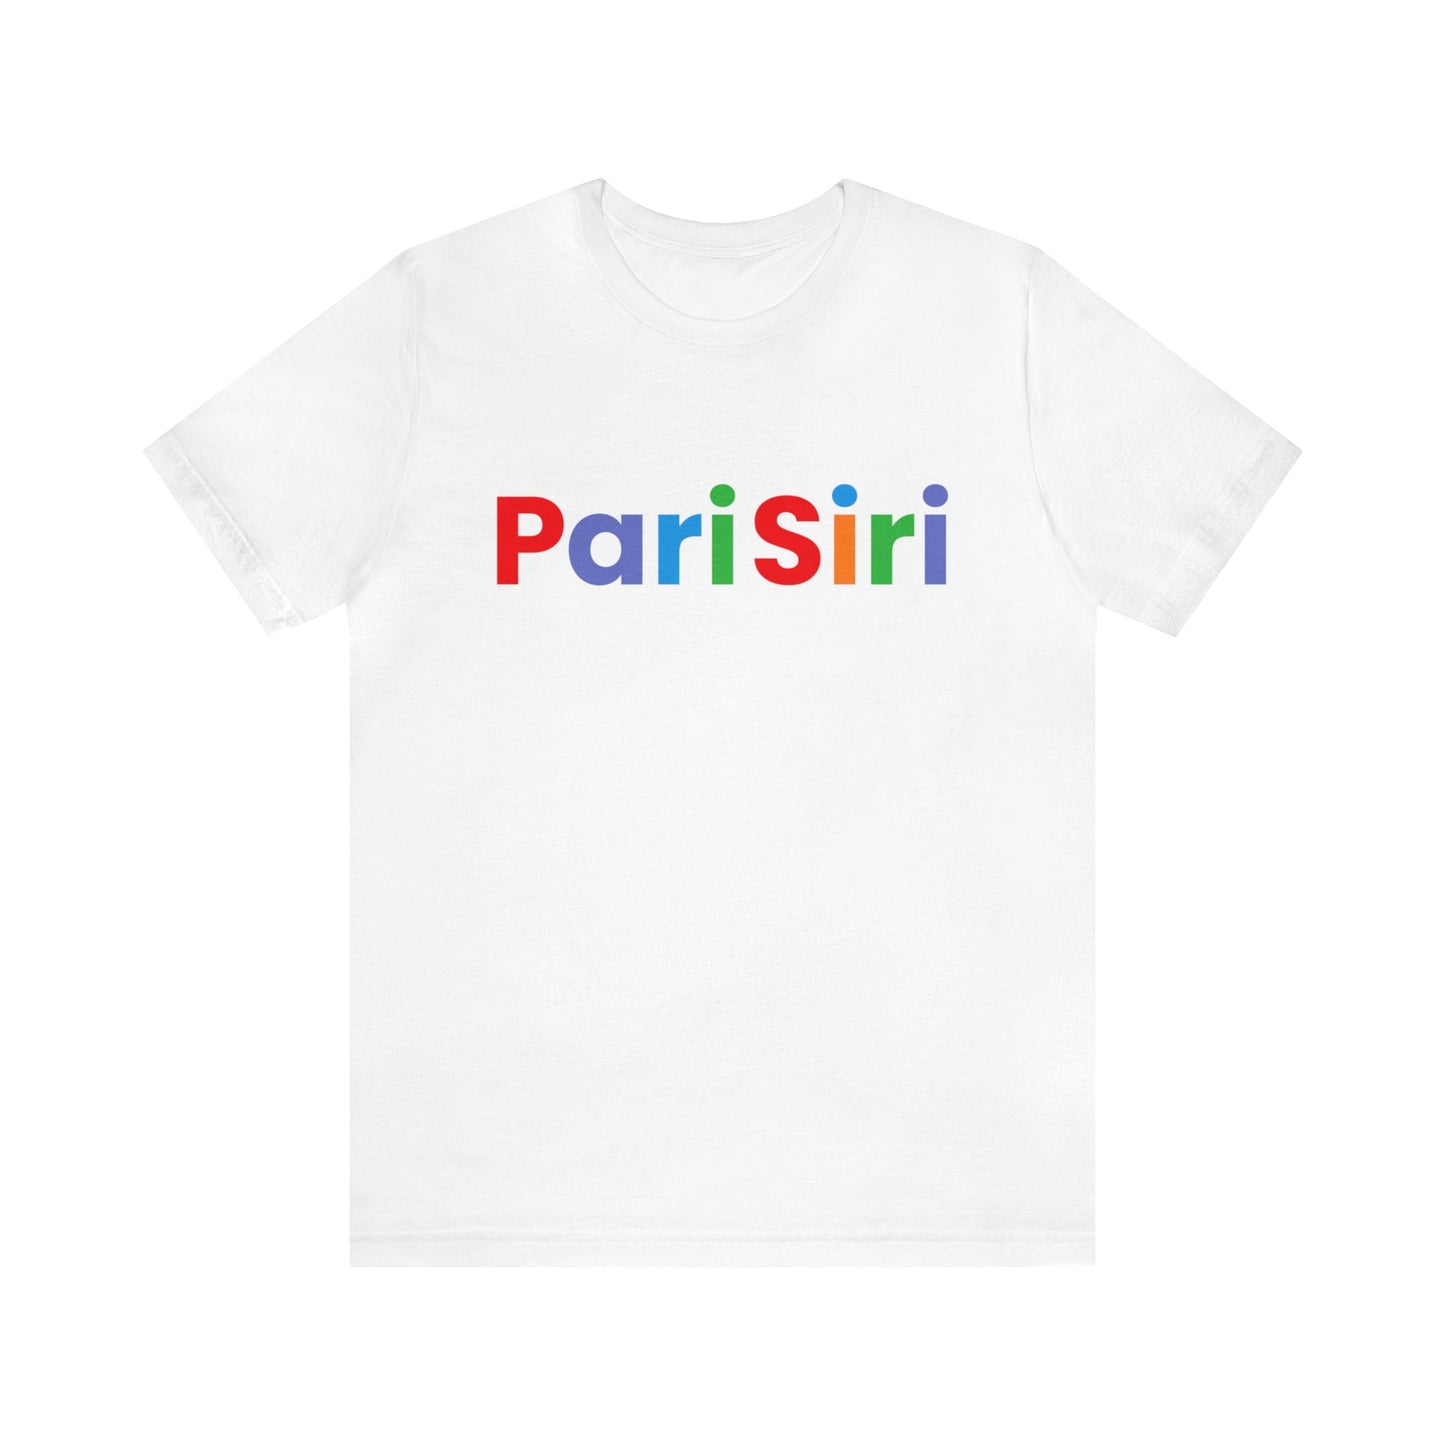 Colorful Pari Siri T-Shirt - Hispanic Inspired Party City Parody Logo